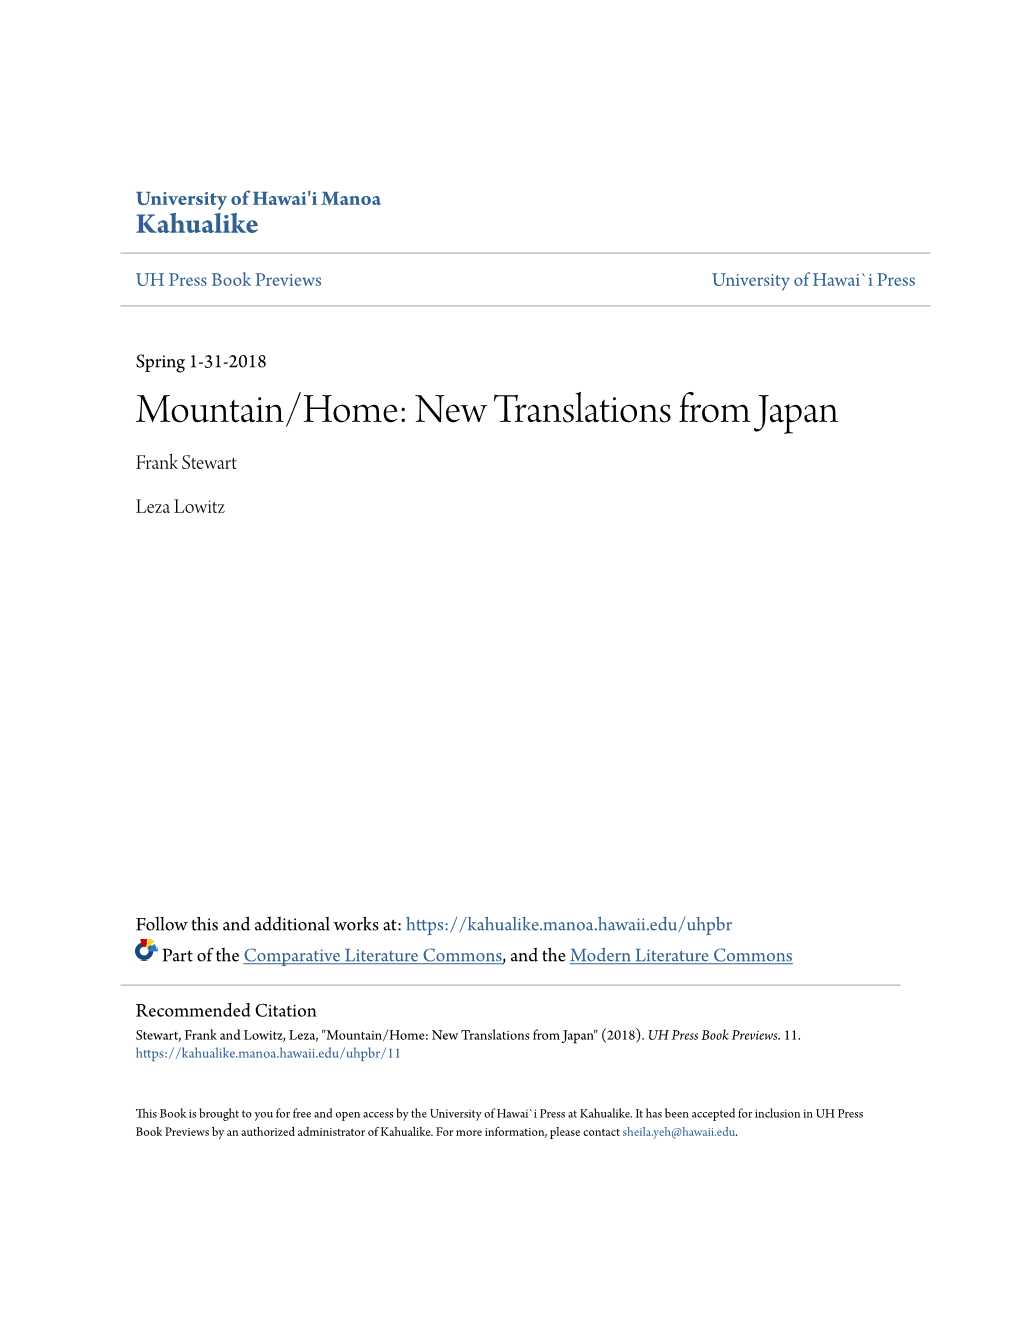 New Translations from Japan Frank Stewart